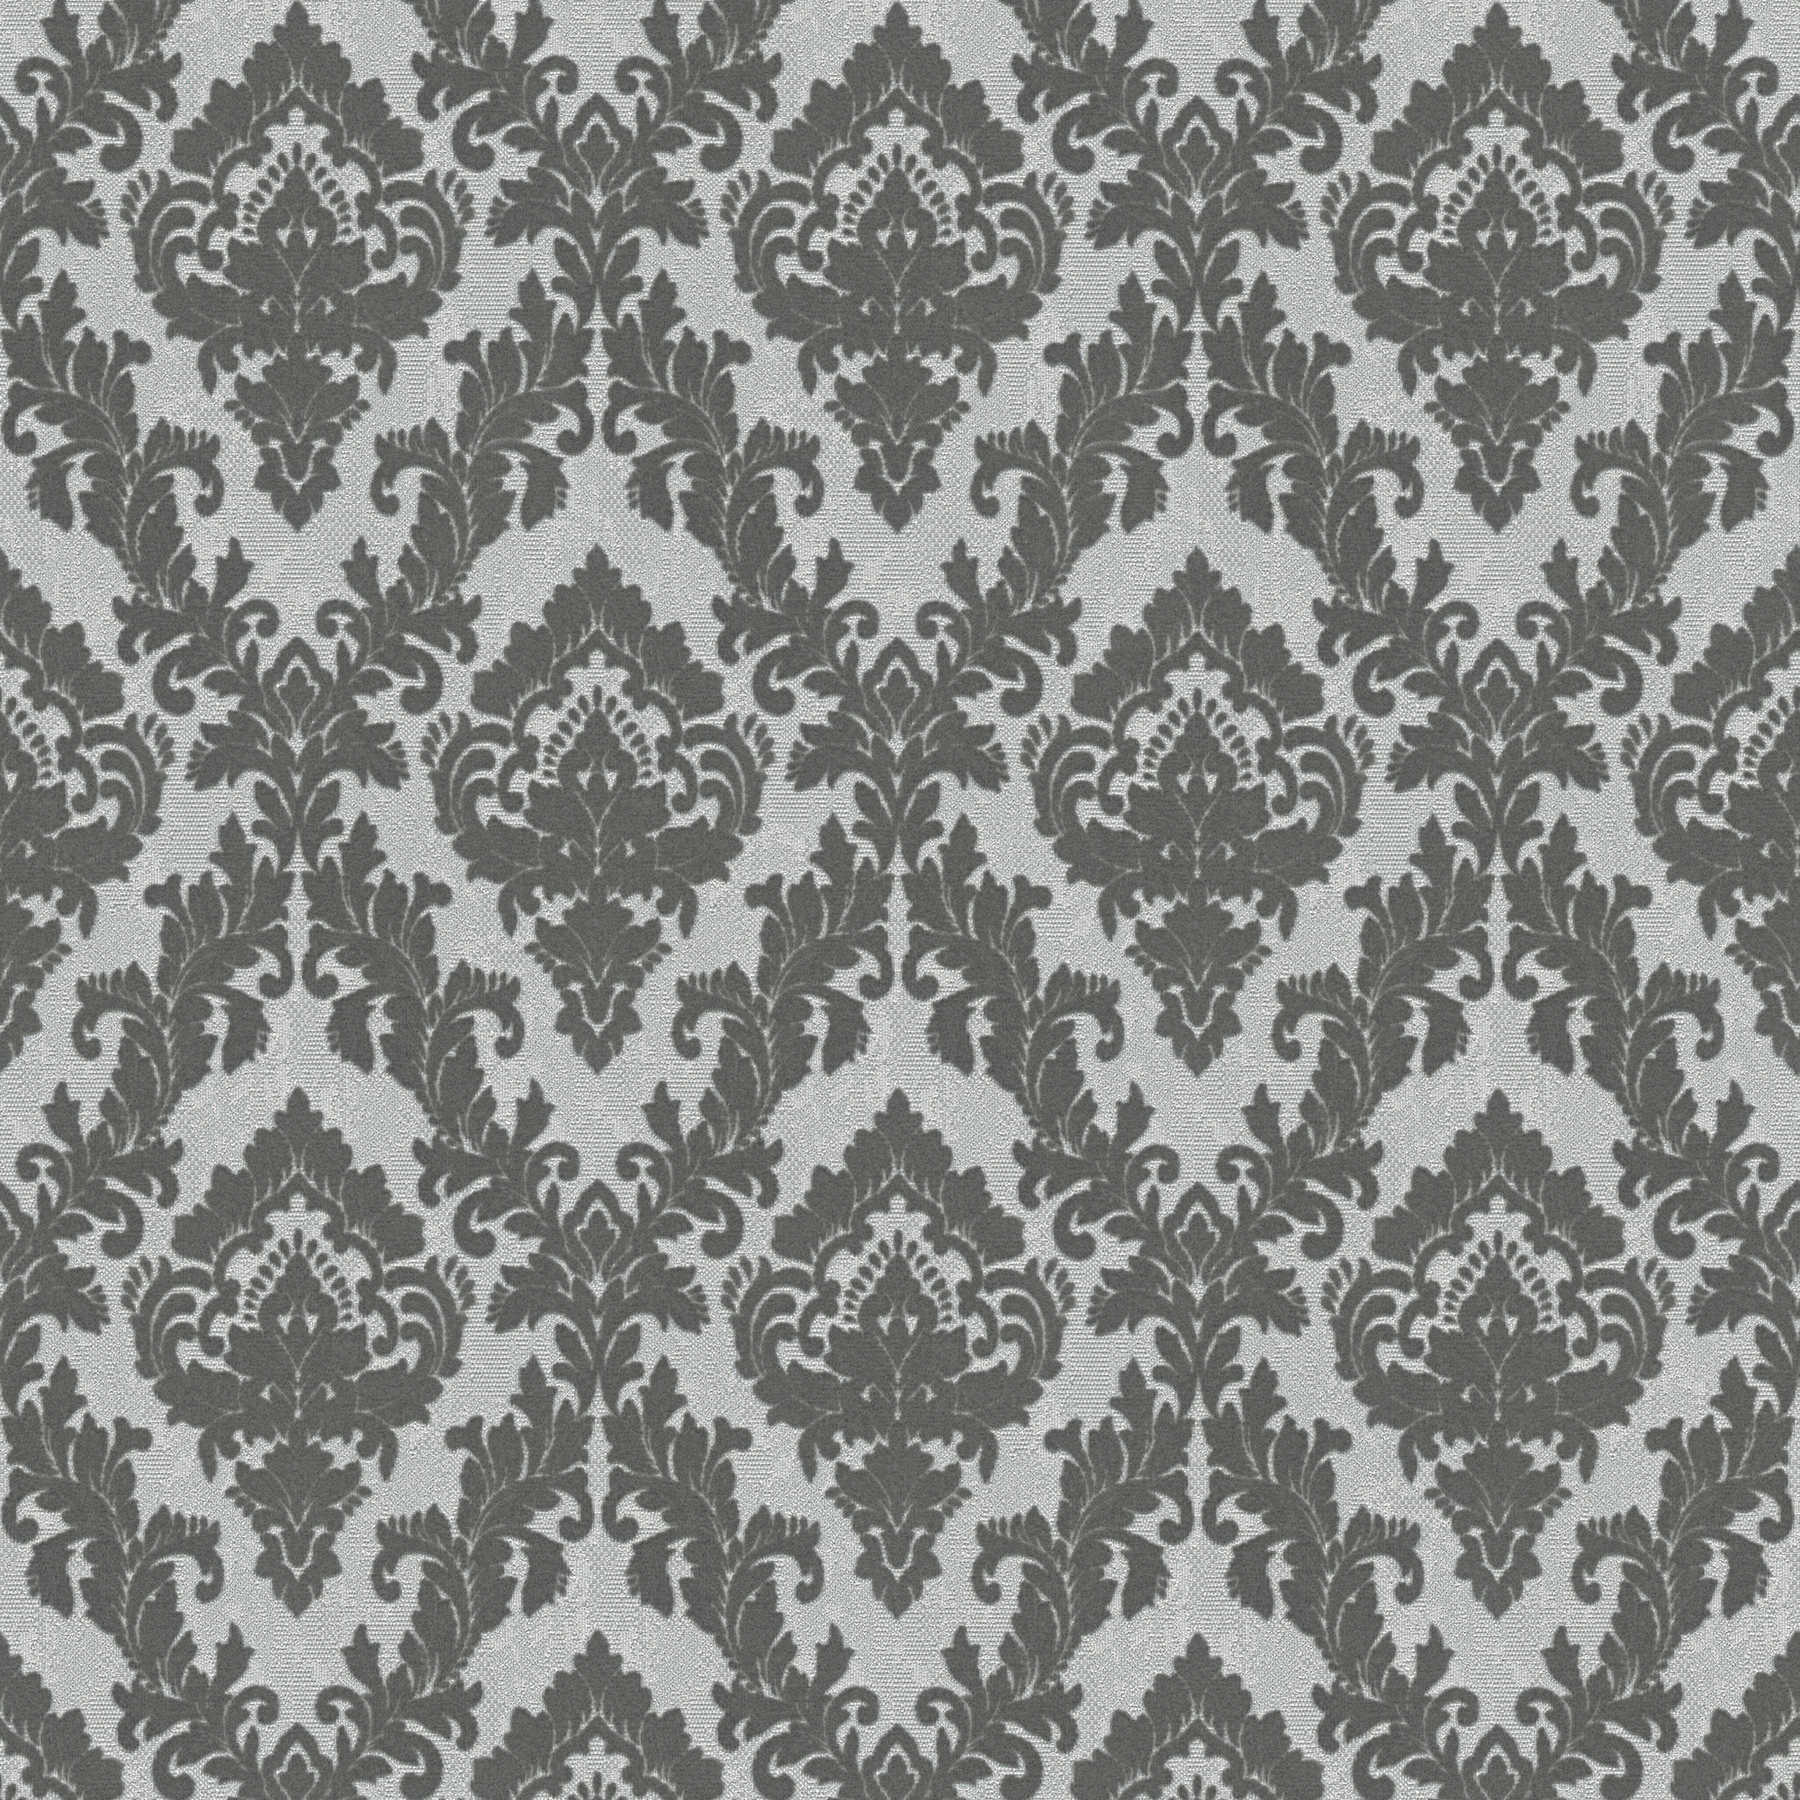 Ornament Tapete mit Flock & Seidenglanz – Grau
